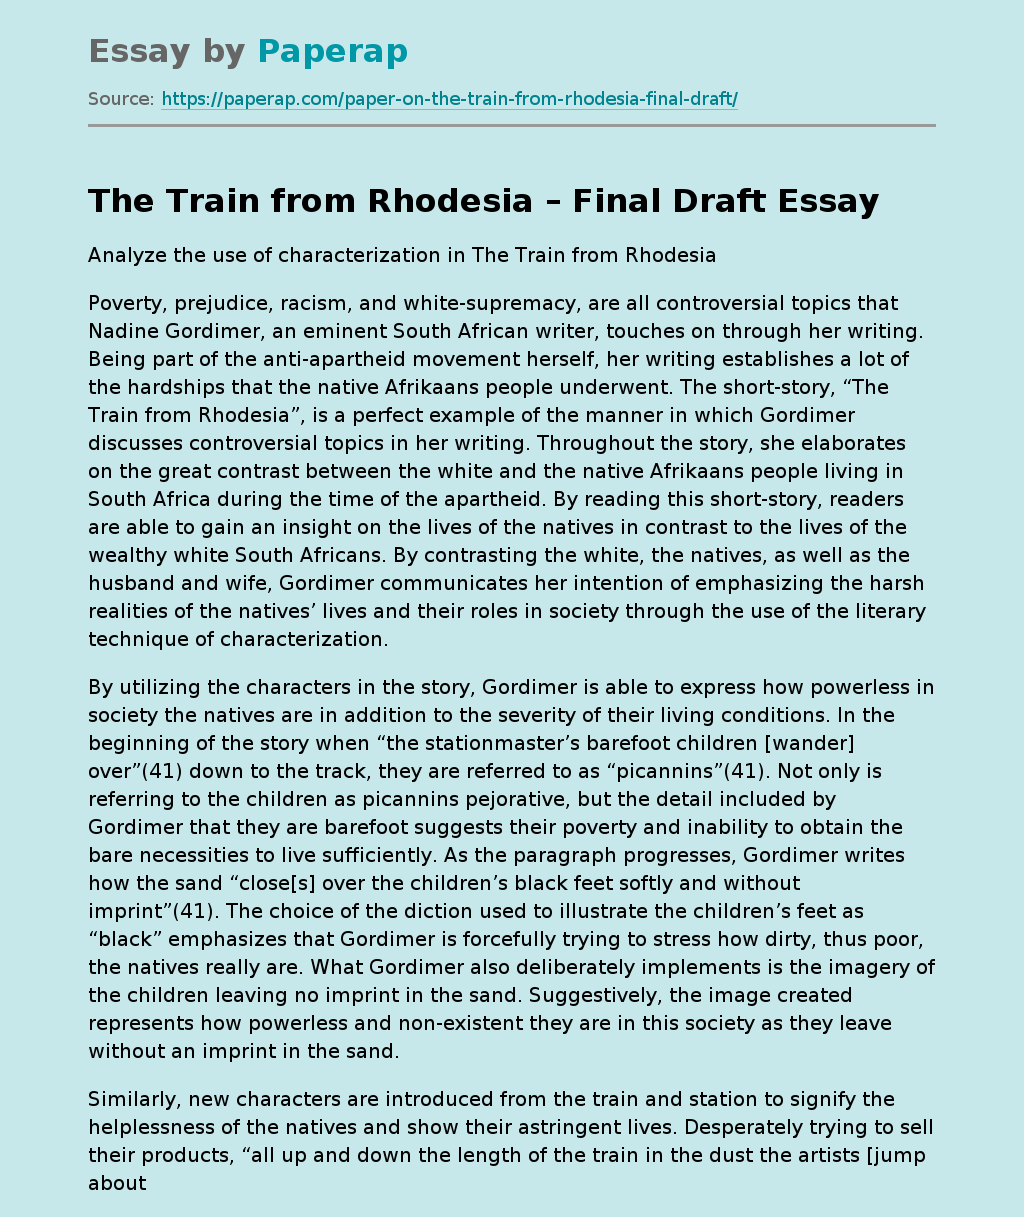 "The Train from Rhodesia" by Nadine Gordimer